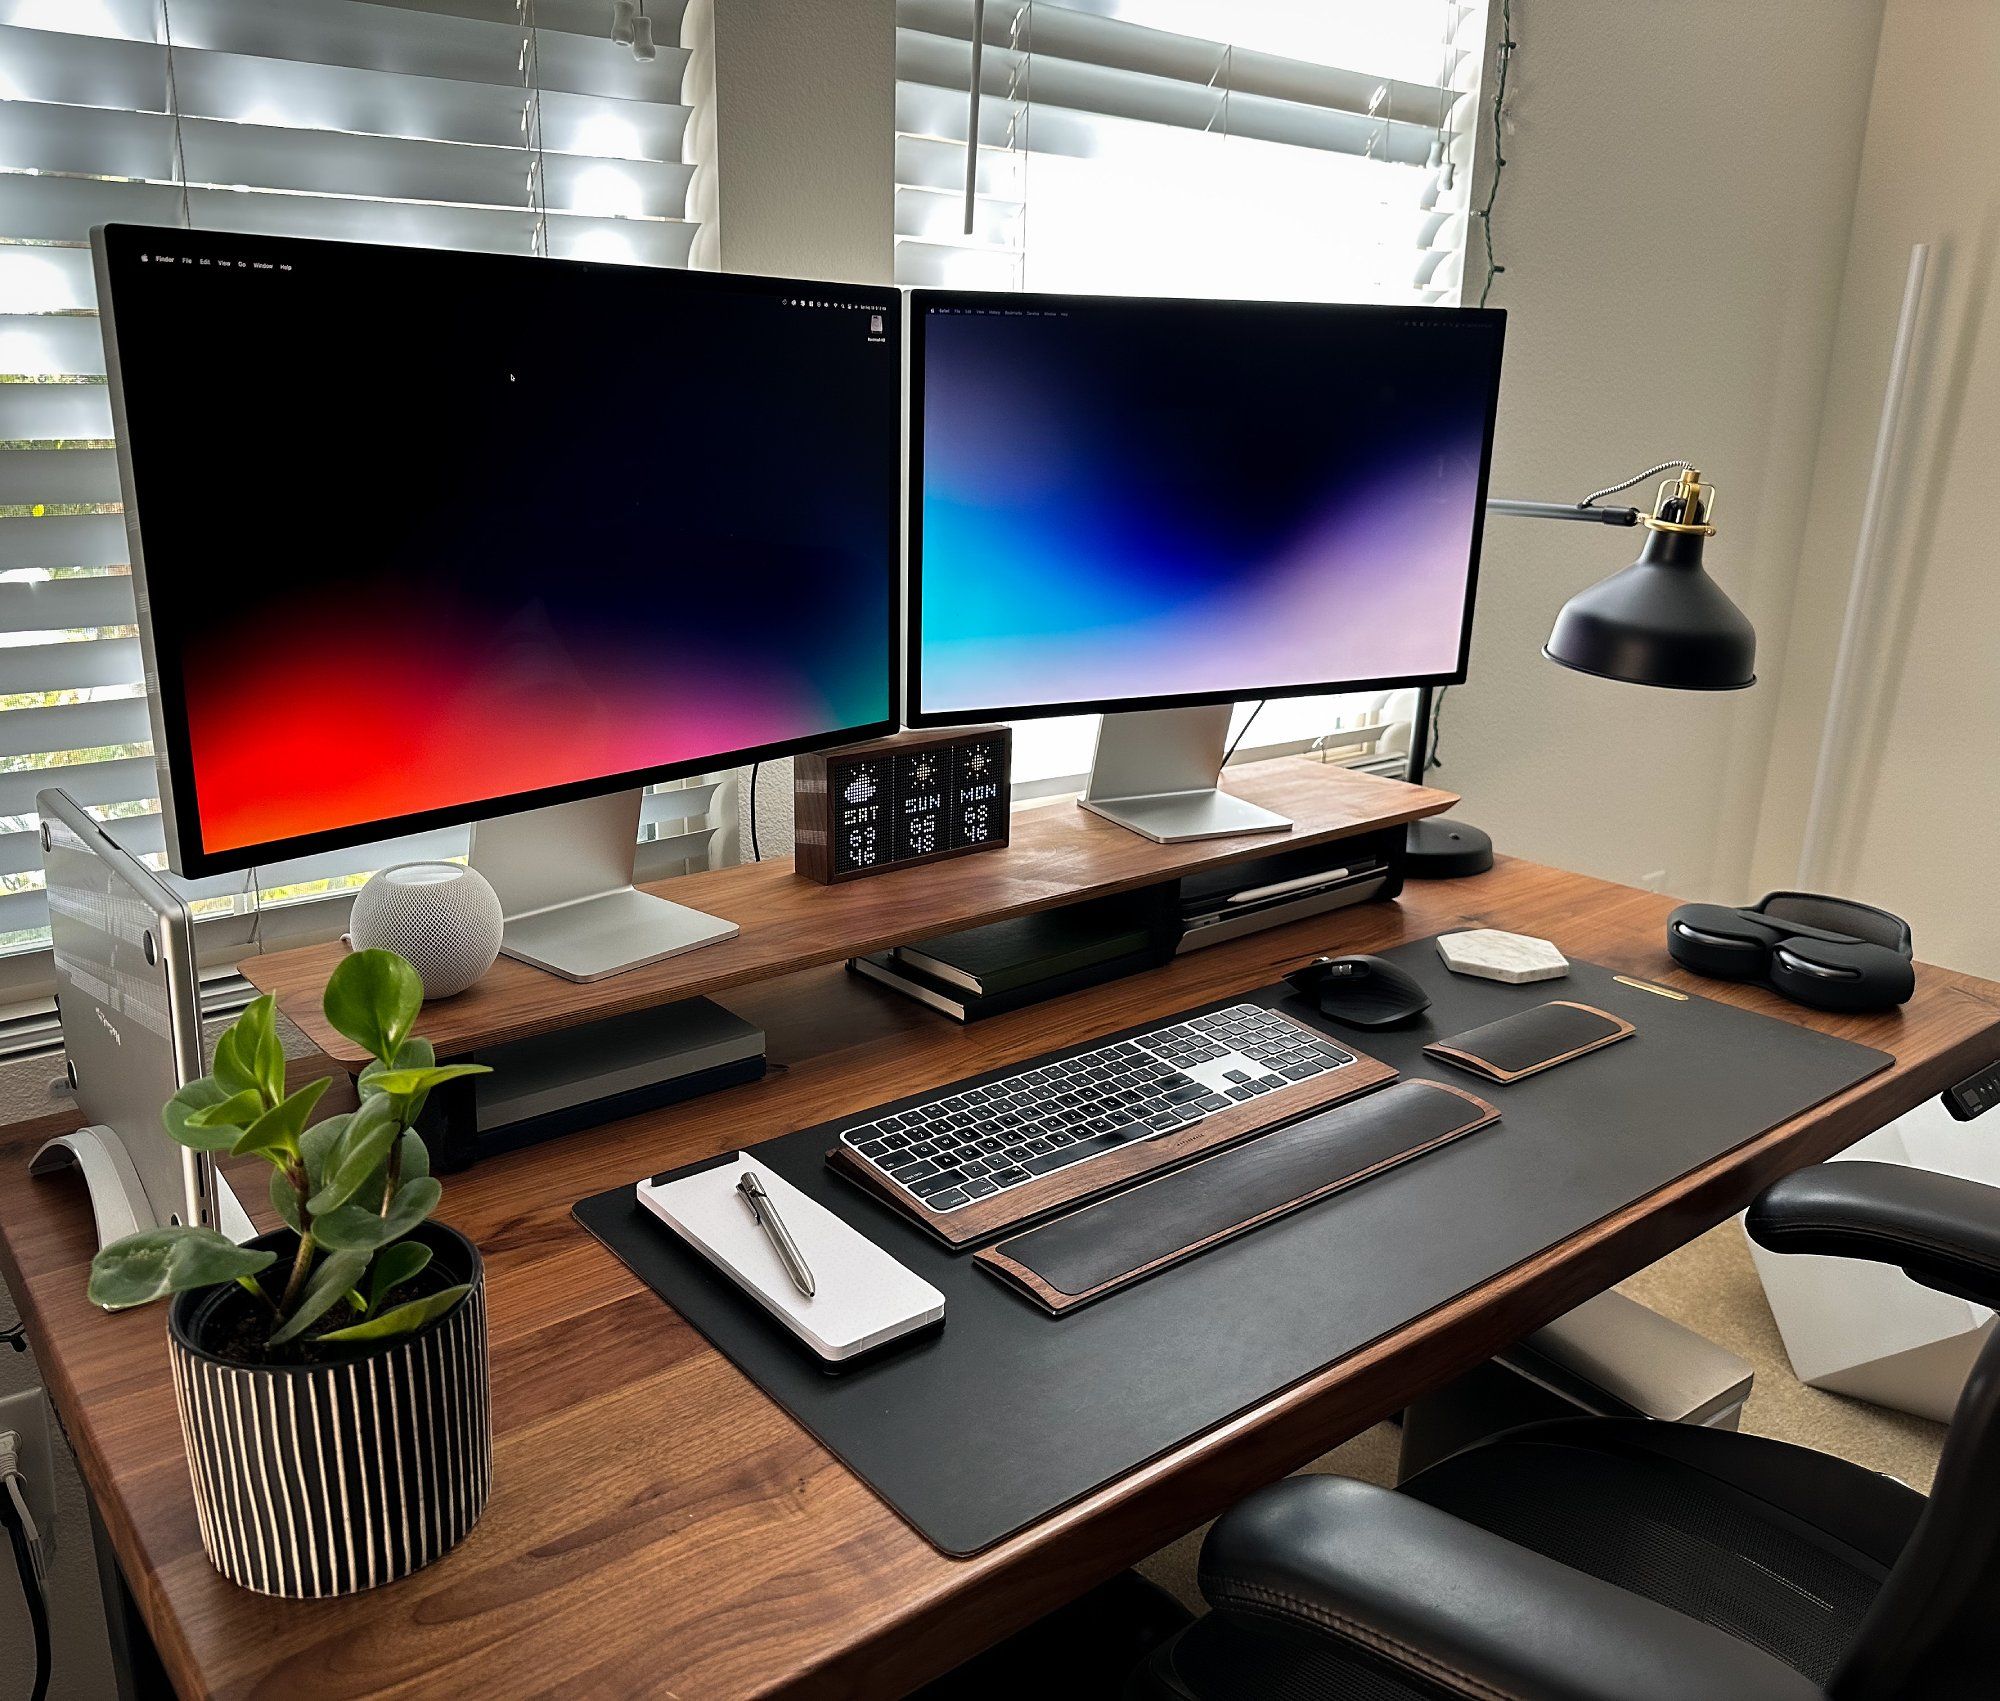 A home desk setup with two Apple Studio Display monitors